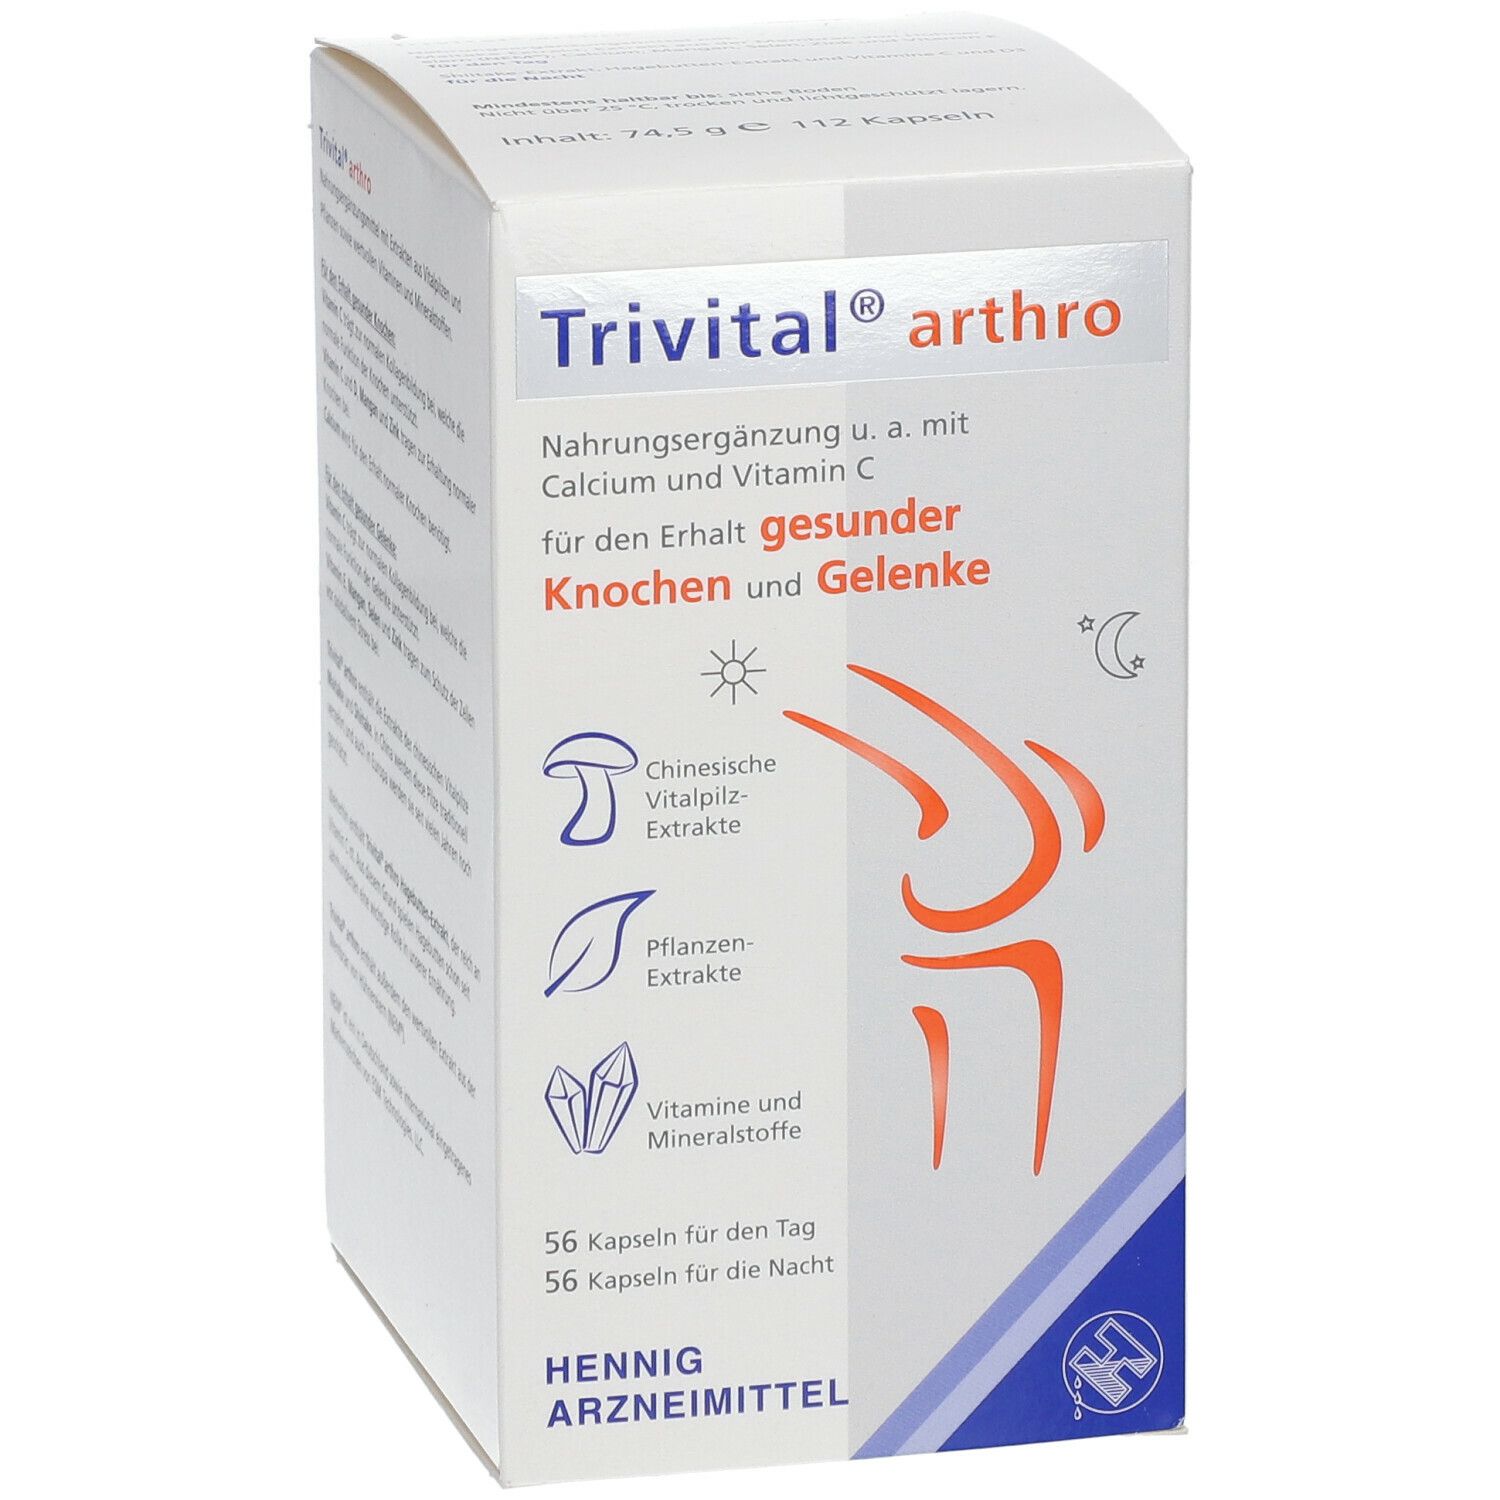 Trivital® arthro